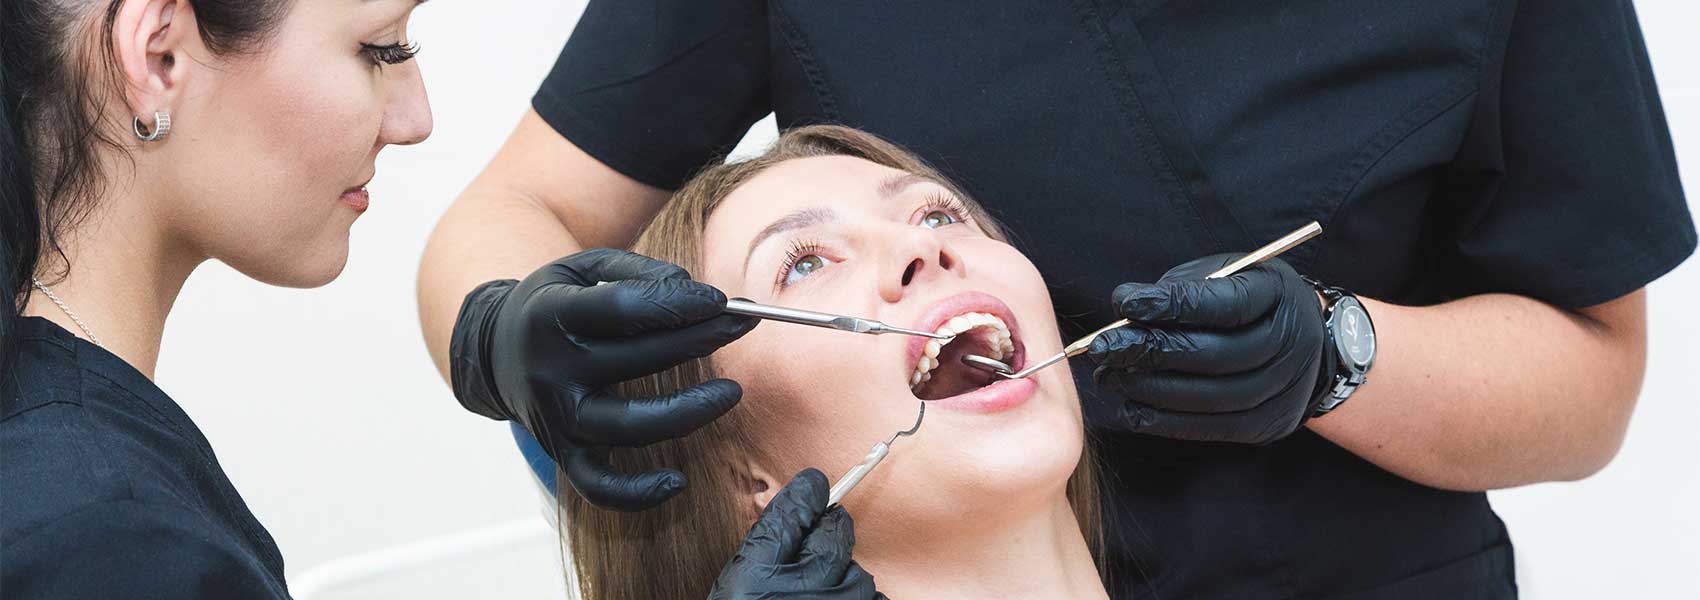 A dental team perform dental restoration treatment for their patient